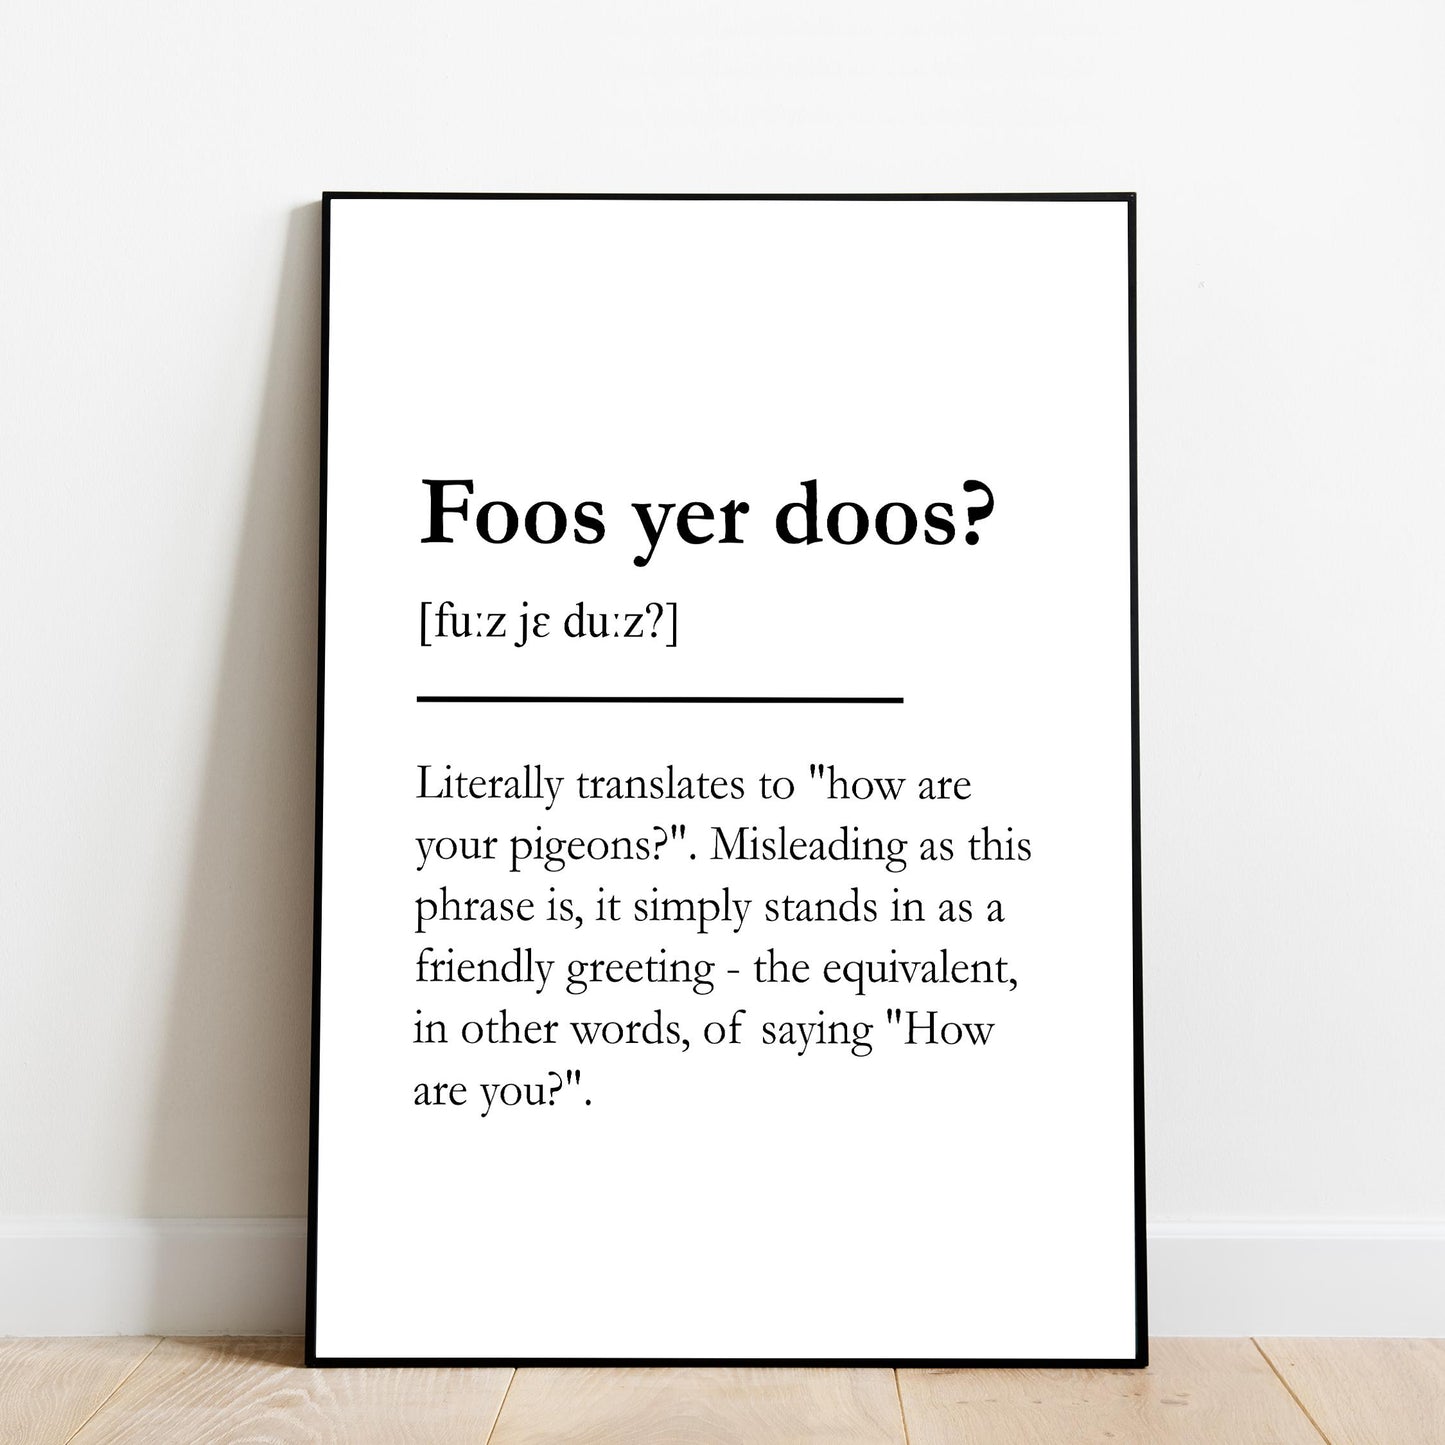 "Foos yer doos?" - Scottish Slang